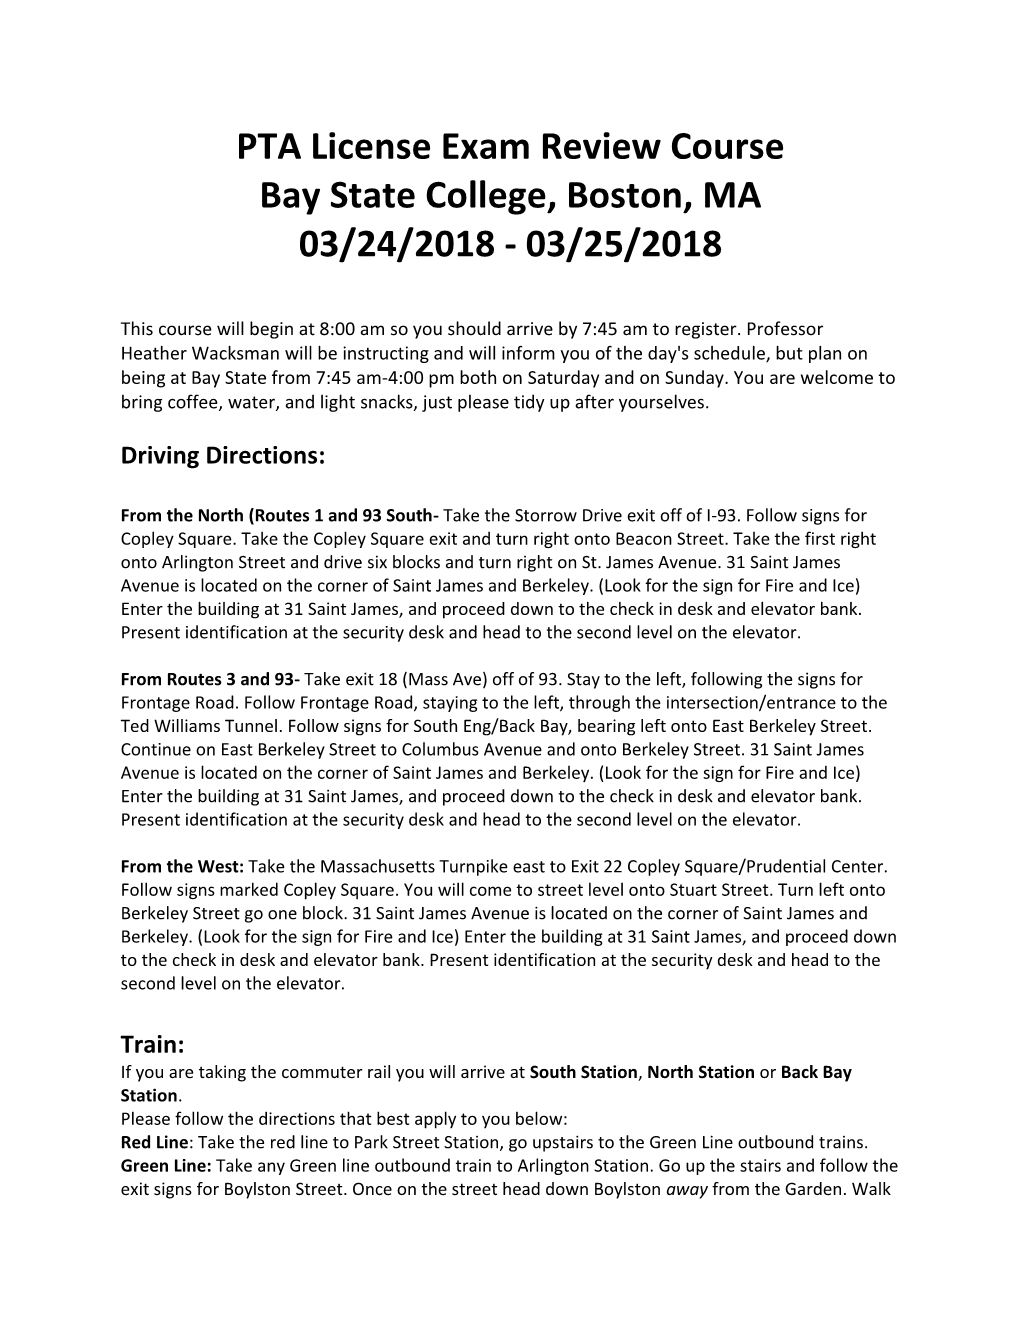 PTA License Exam Review Course Bay State College, Boston, MA 03/24/2018 - 03/25/2018